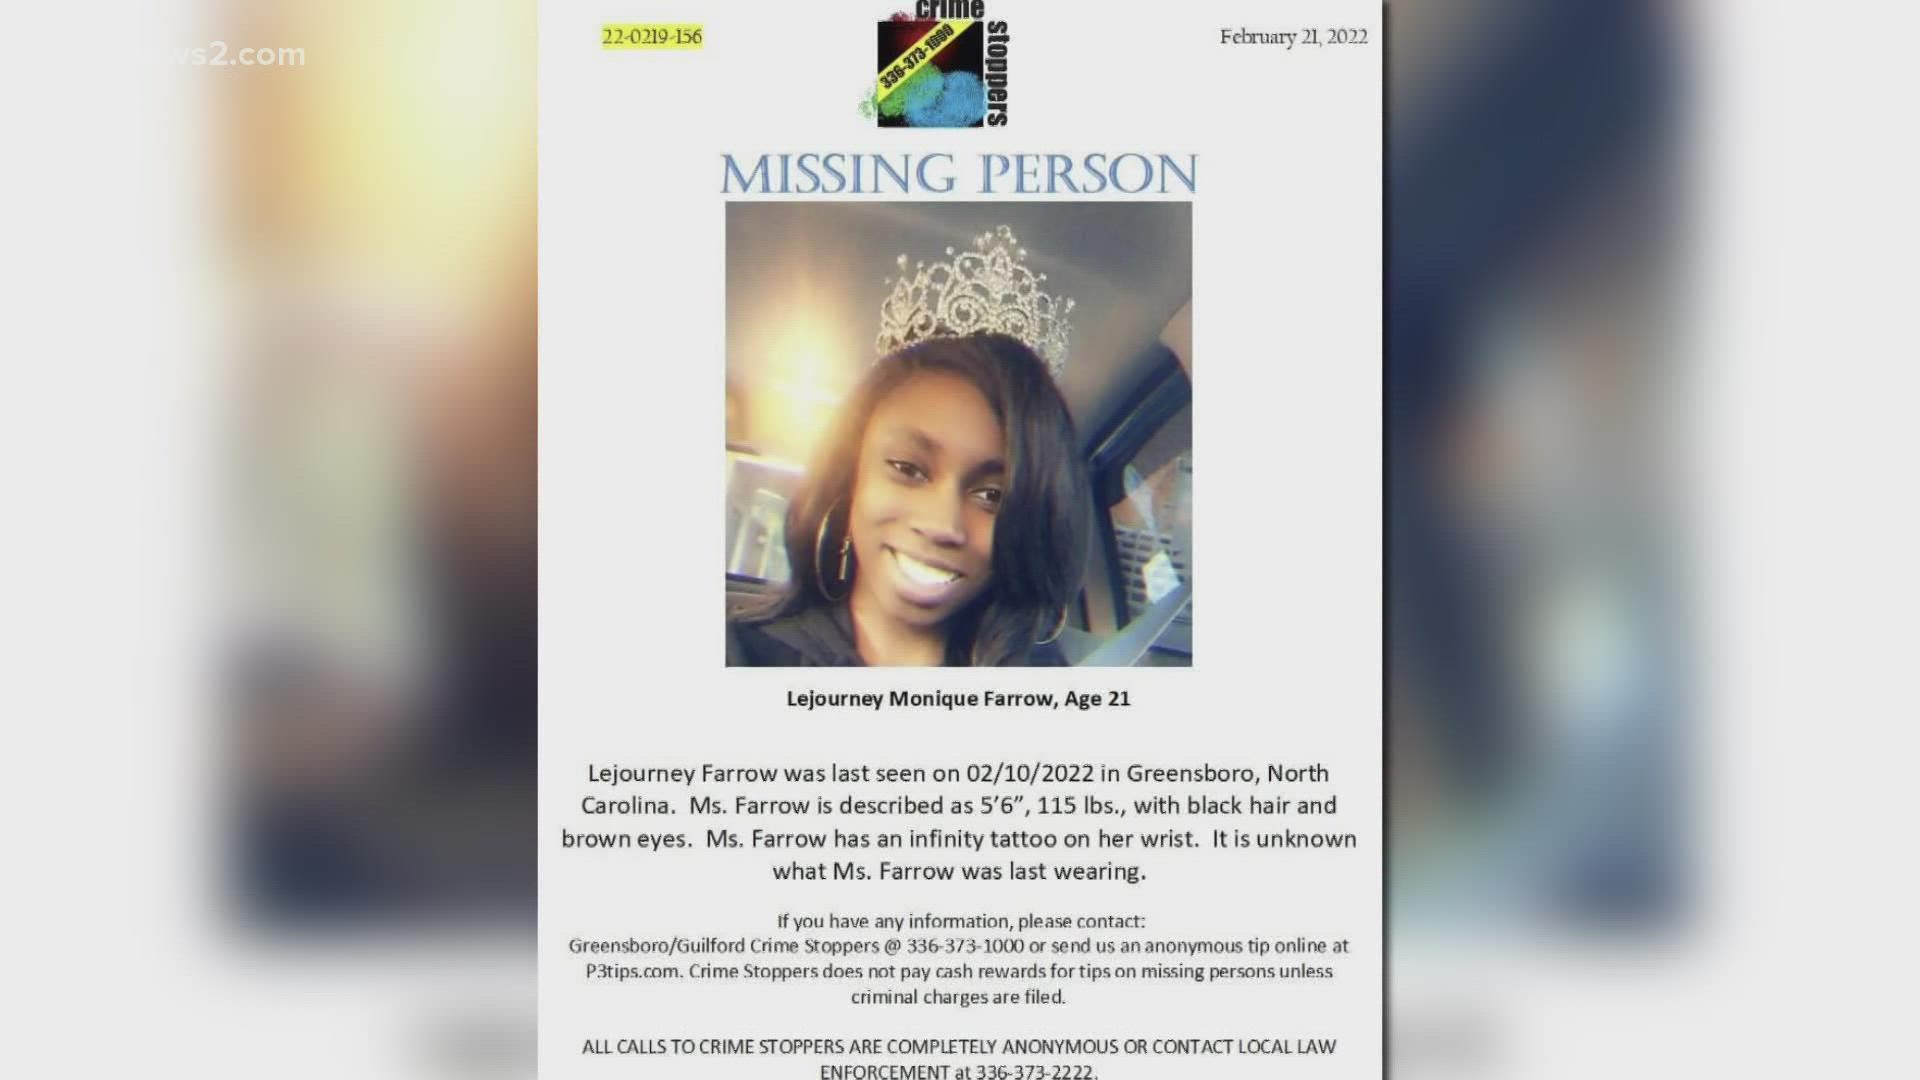 Lejourney Farrow has been missing since February 10, last seen in Greensboro.